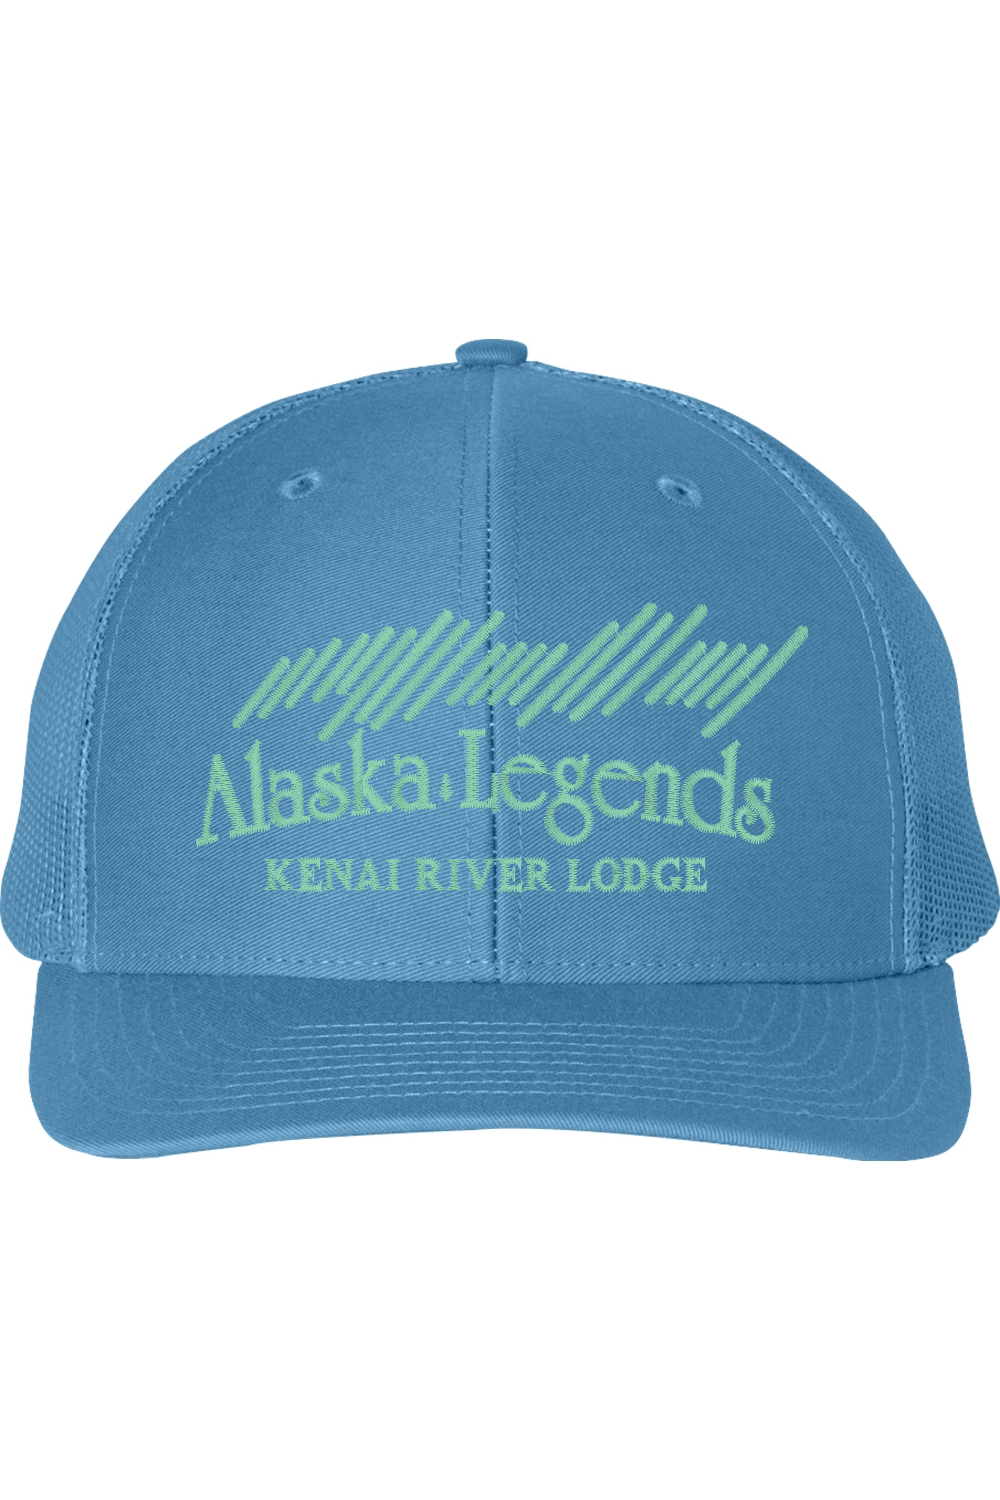 Alaska Legends Kenai River Lodge Snapback Trucker Hat